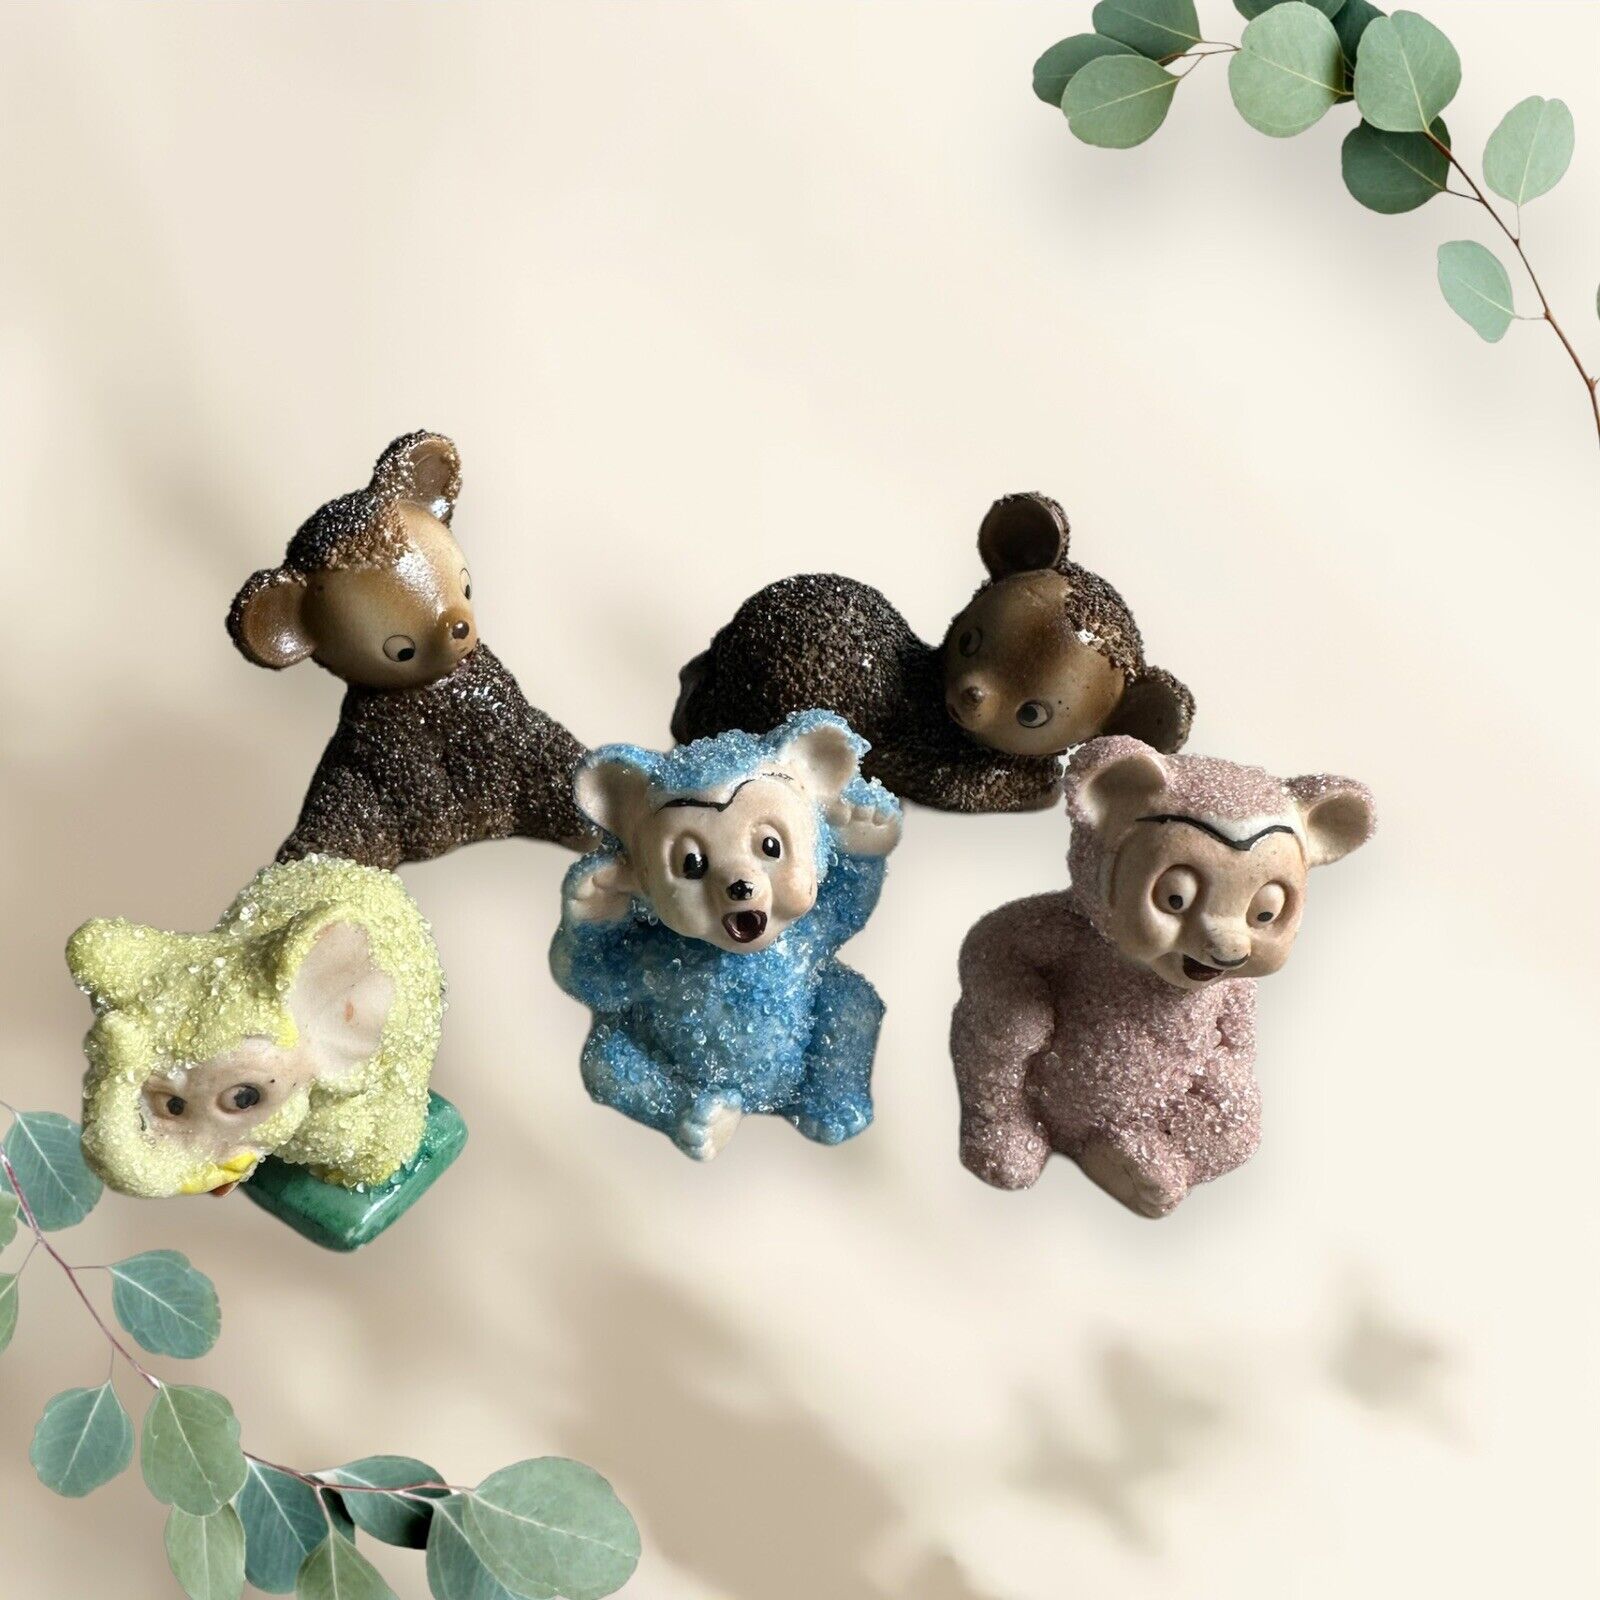 Vintage 1950s Sugar Bears & Elephant Kitschy Figurines Made in Japan